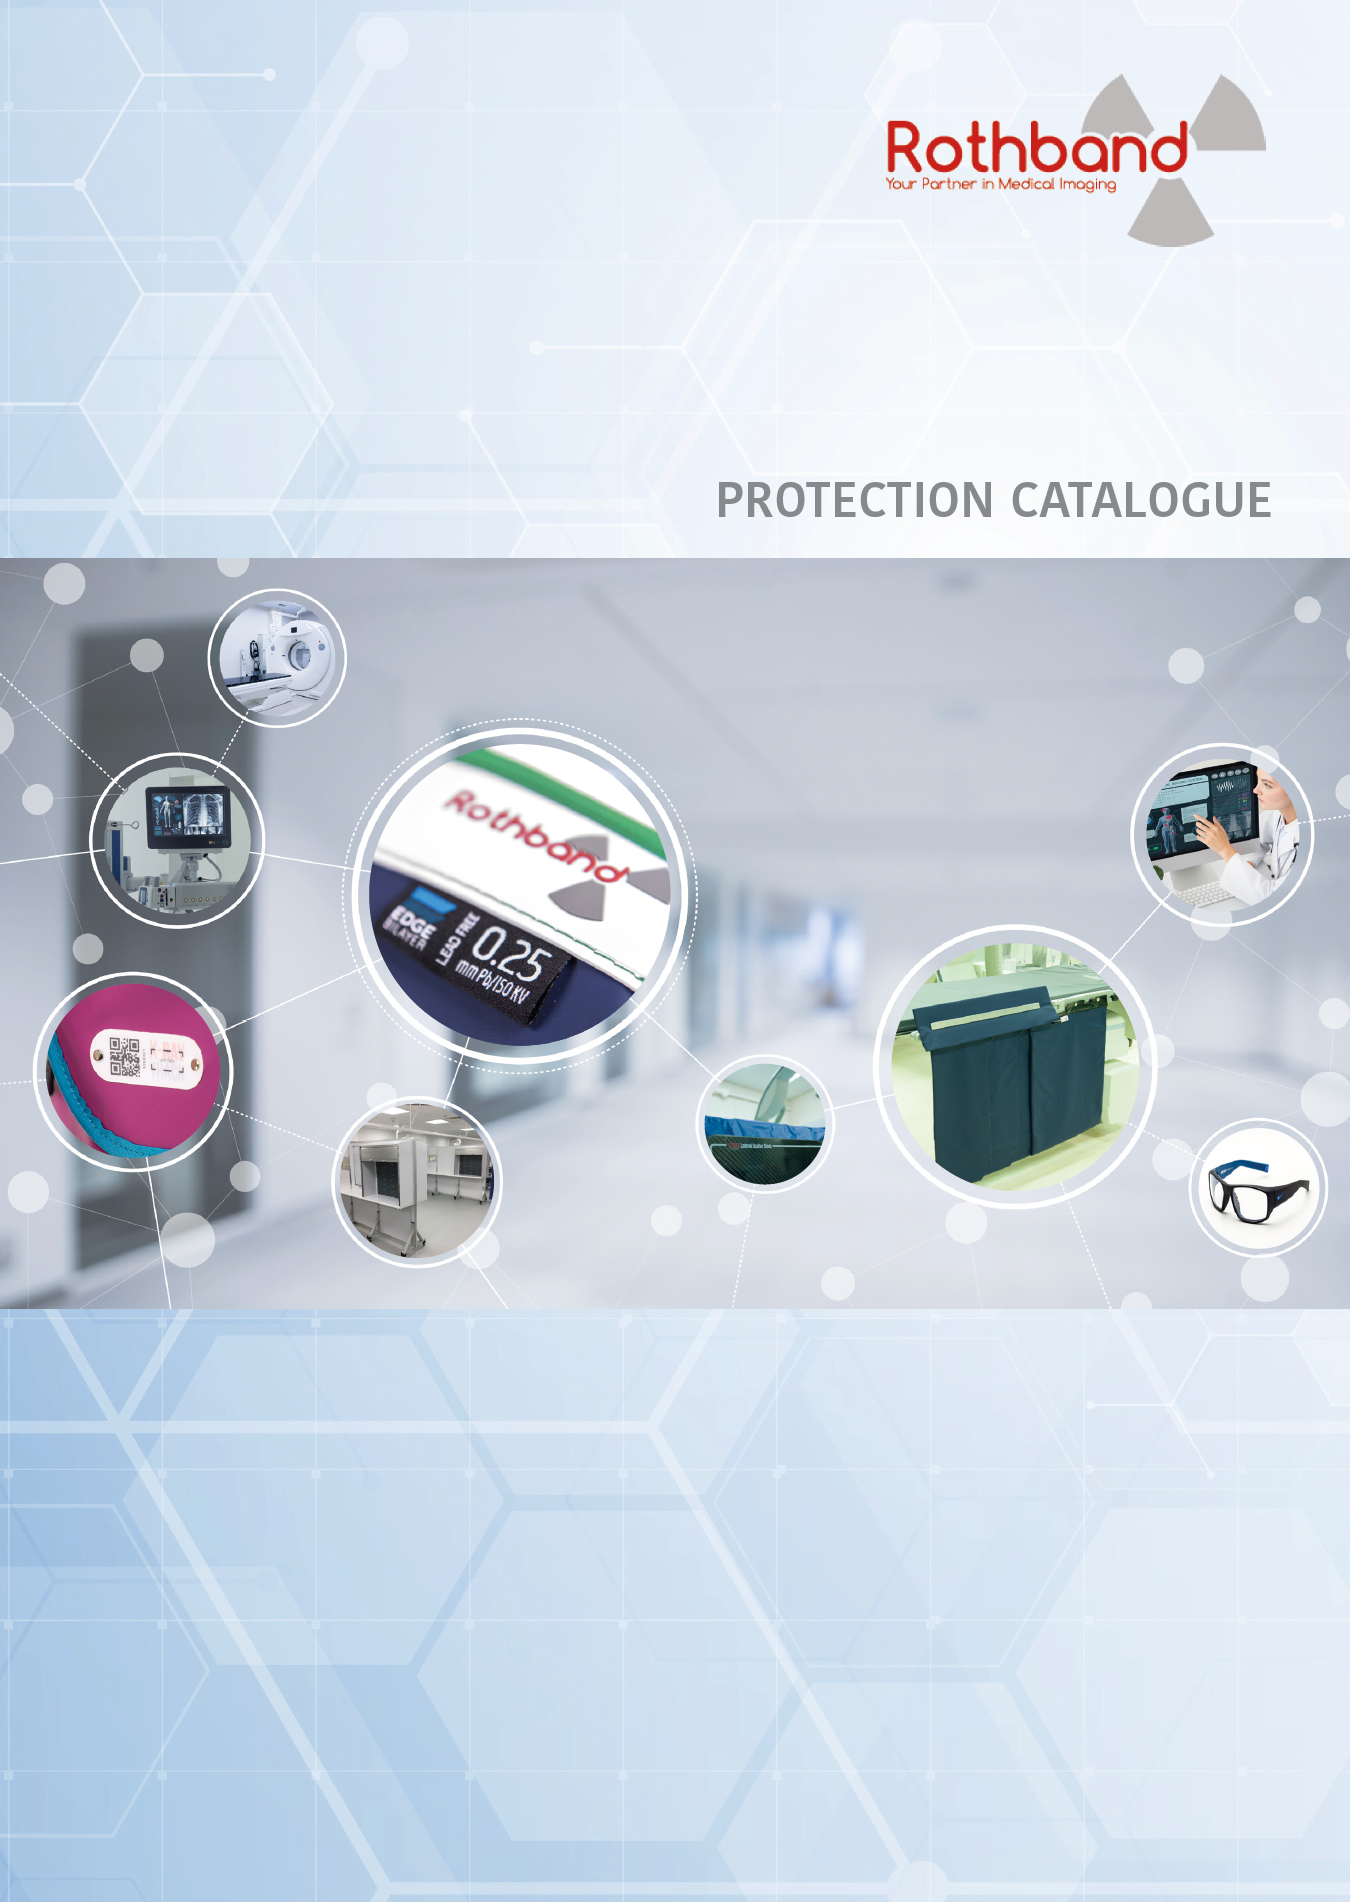 rothband protection catalogue